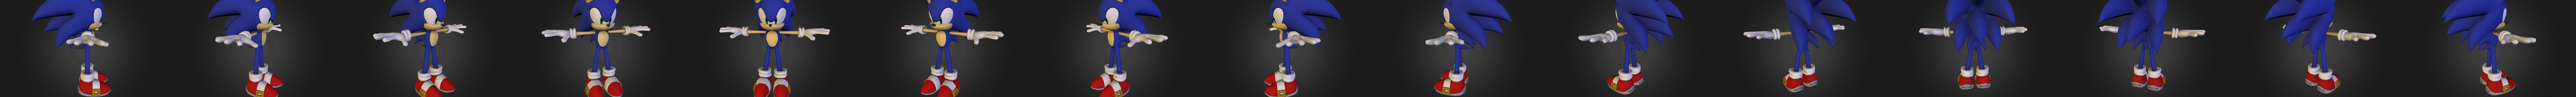 Wii - Sonic Colors - Sonic - Download Free 3D model by shulktime626  (@shulktime626) [5db5890]